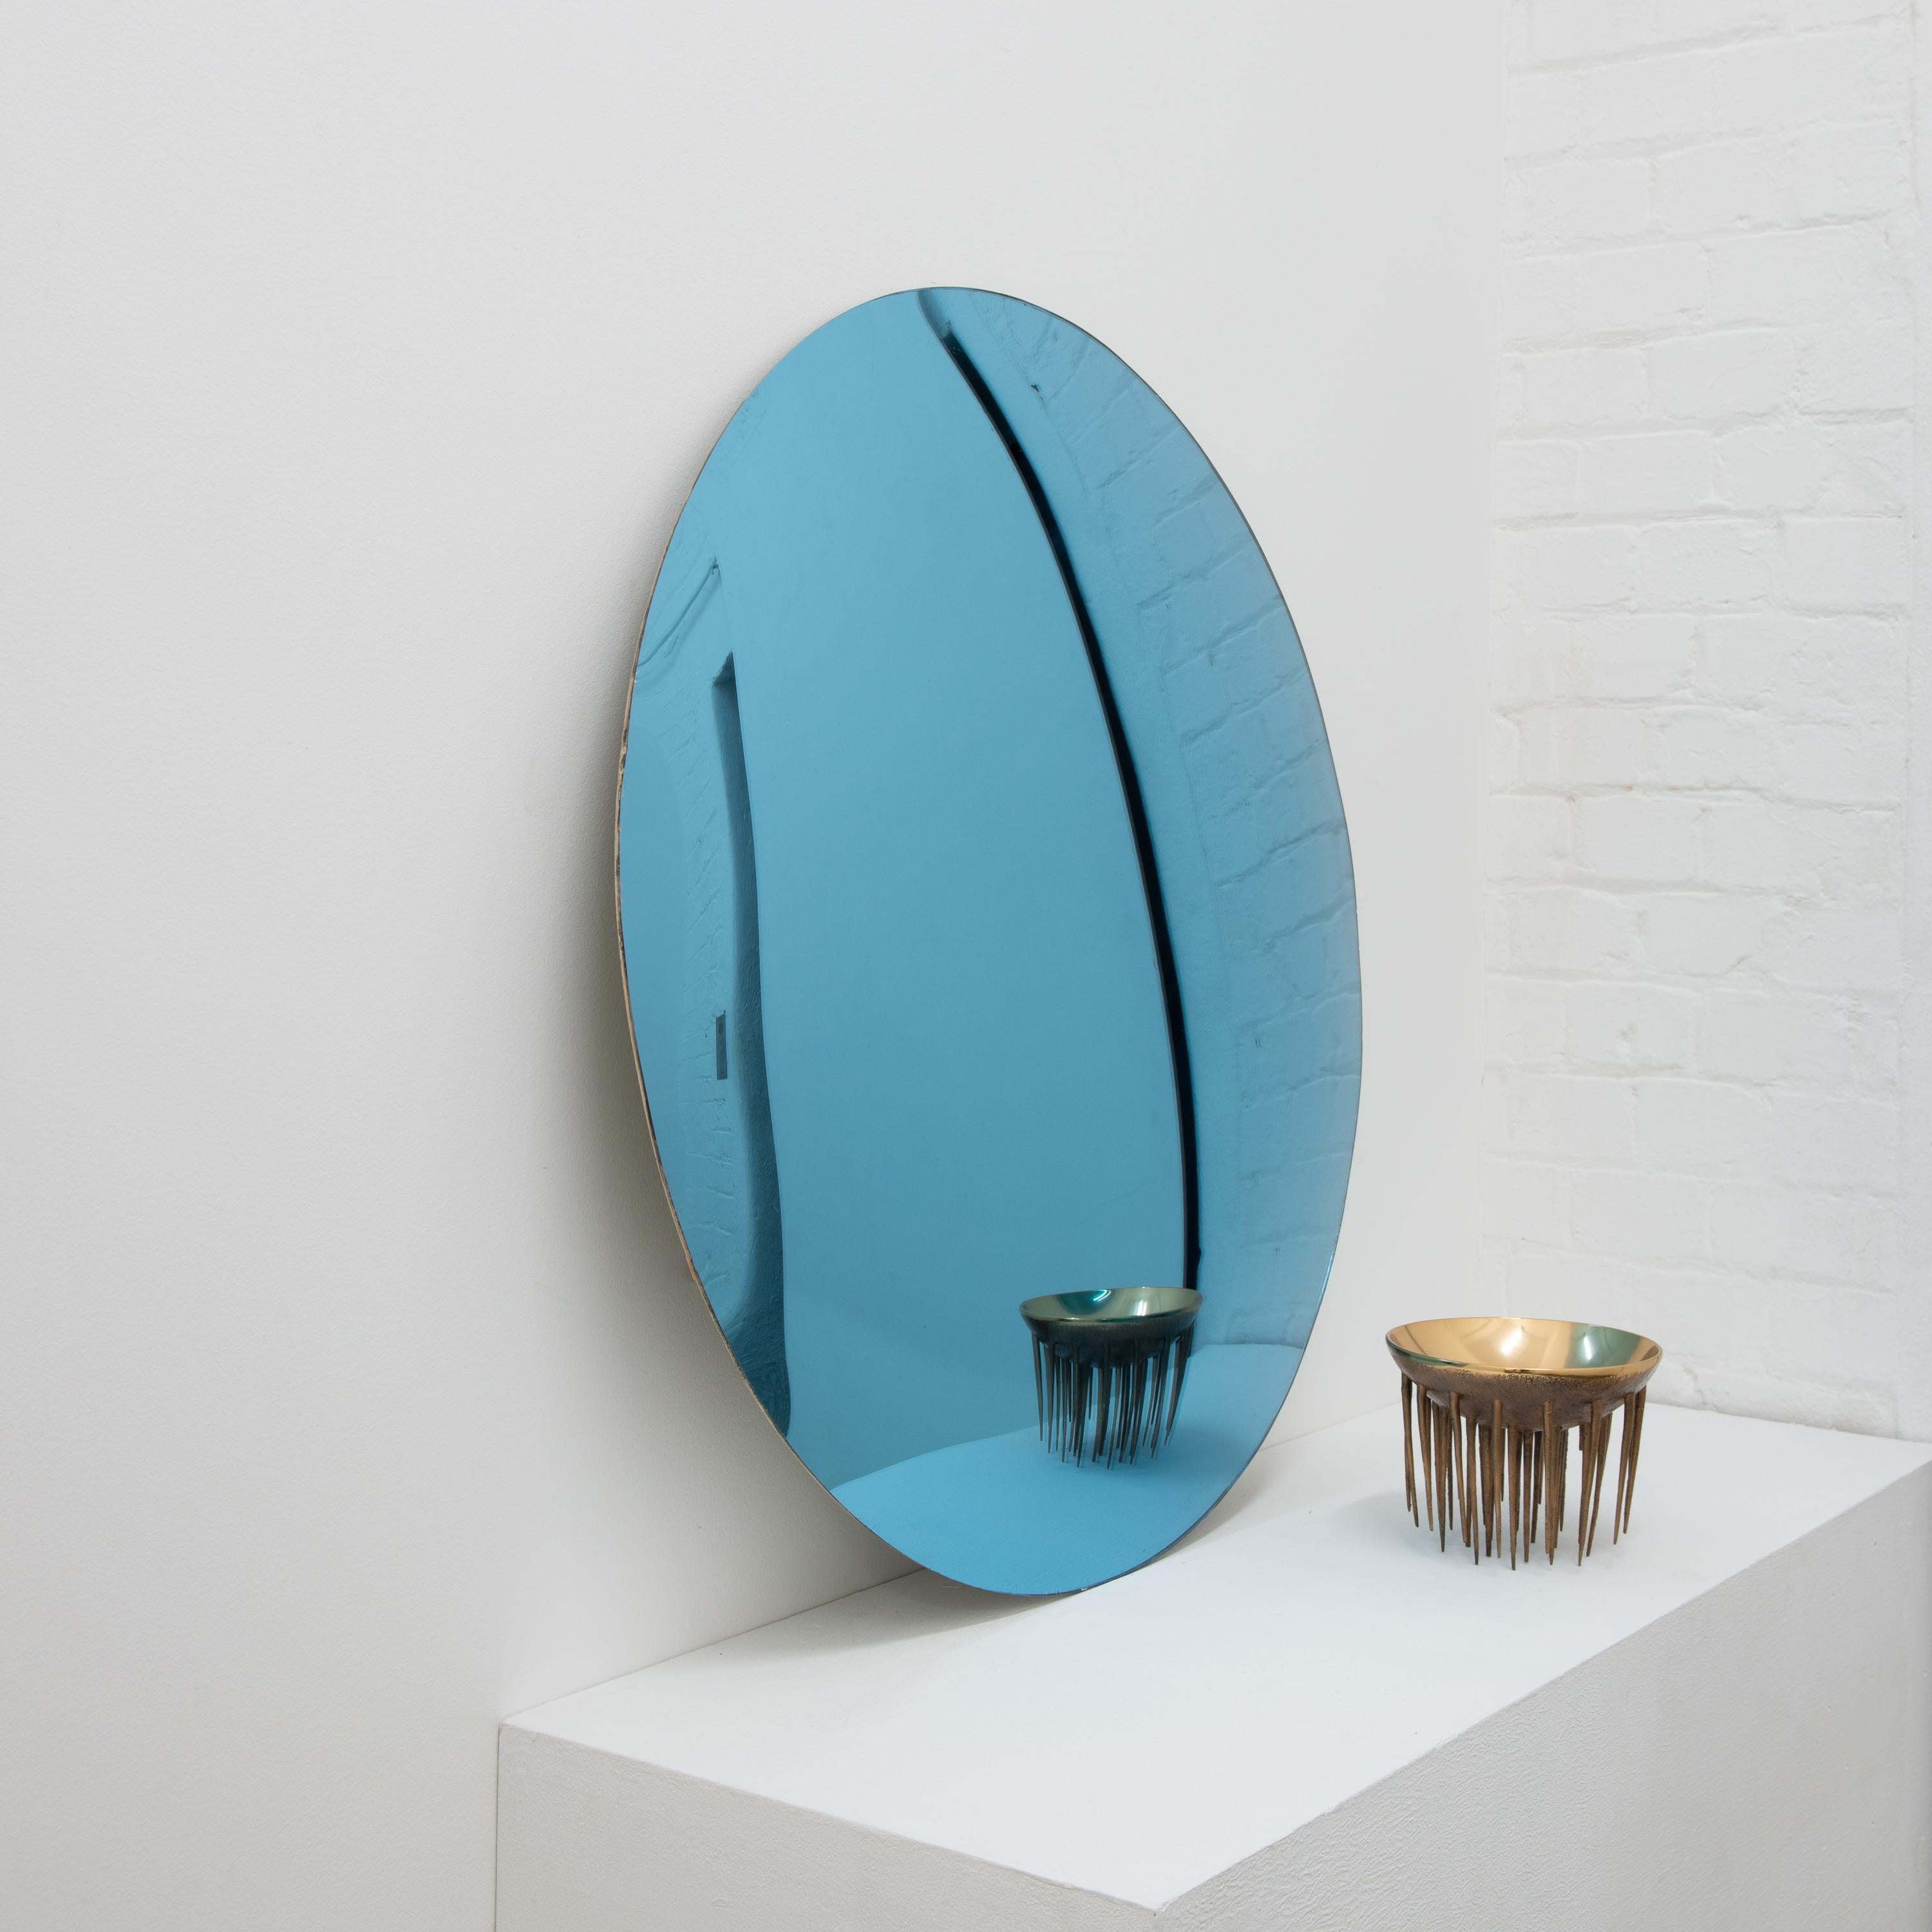 Miroir Orbis Convex Blue Handcraft Handcrafted Frameless Contemporary Round Mirror, Large (miroir rond convexe bleu, sans cadre) en vente